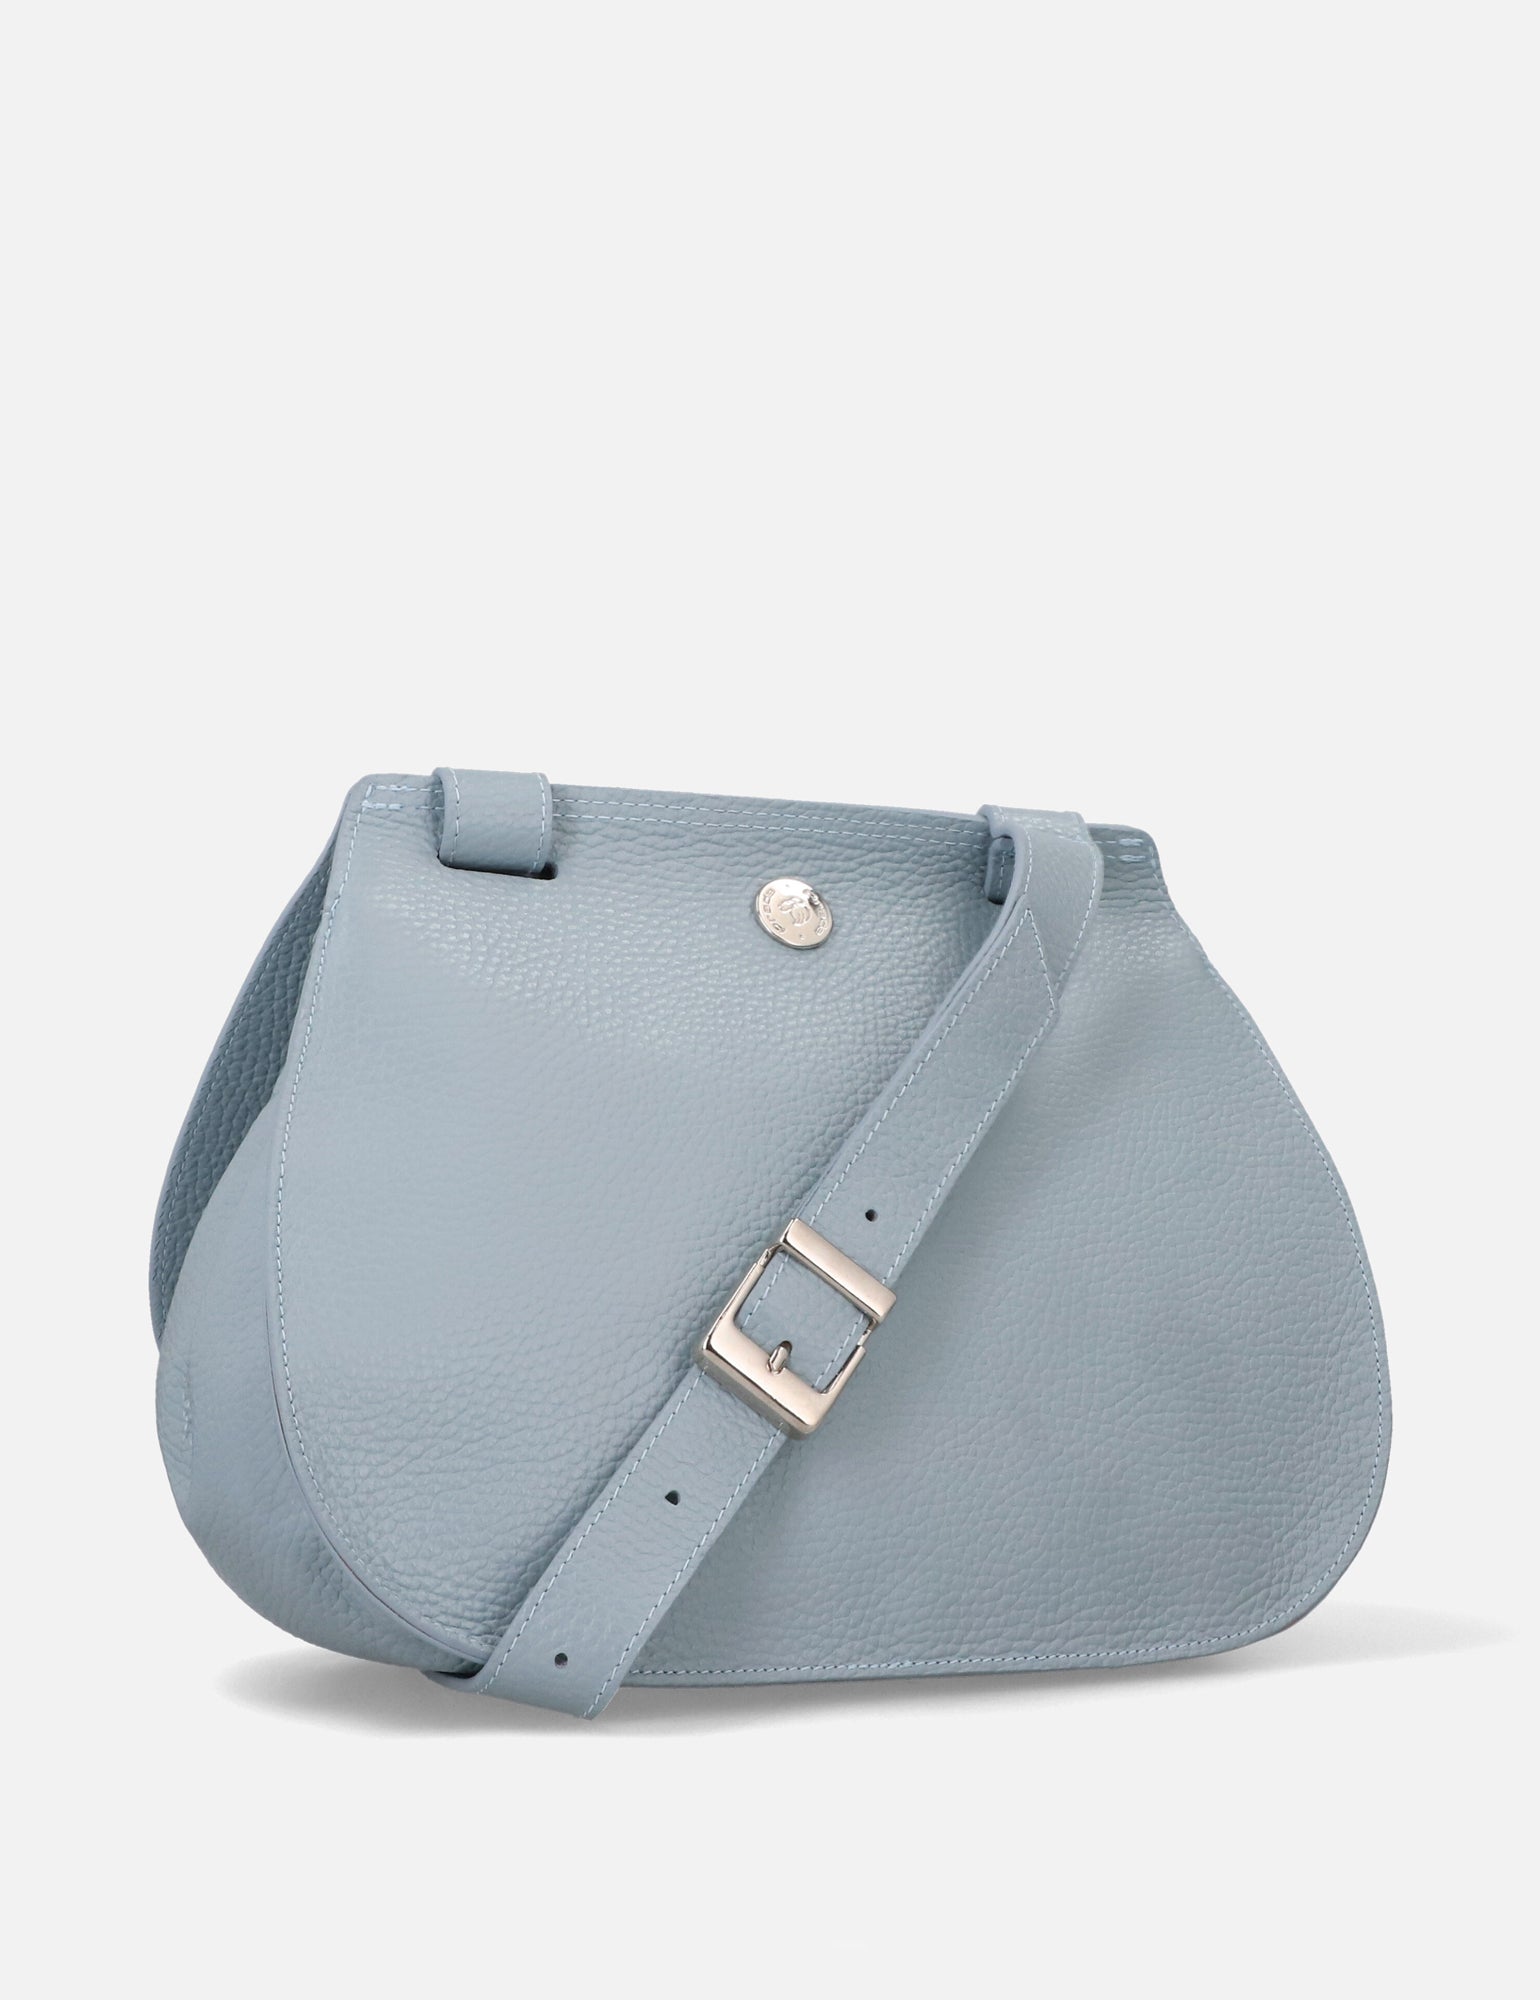 Bolso satchel en piel bombeada color azul